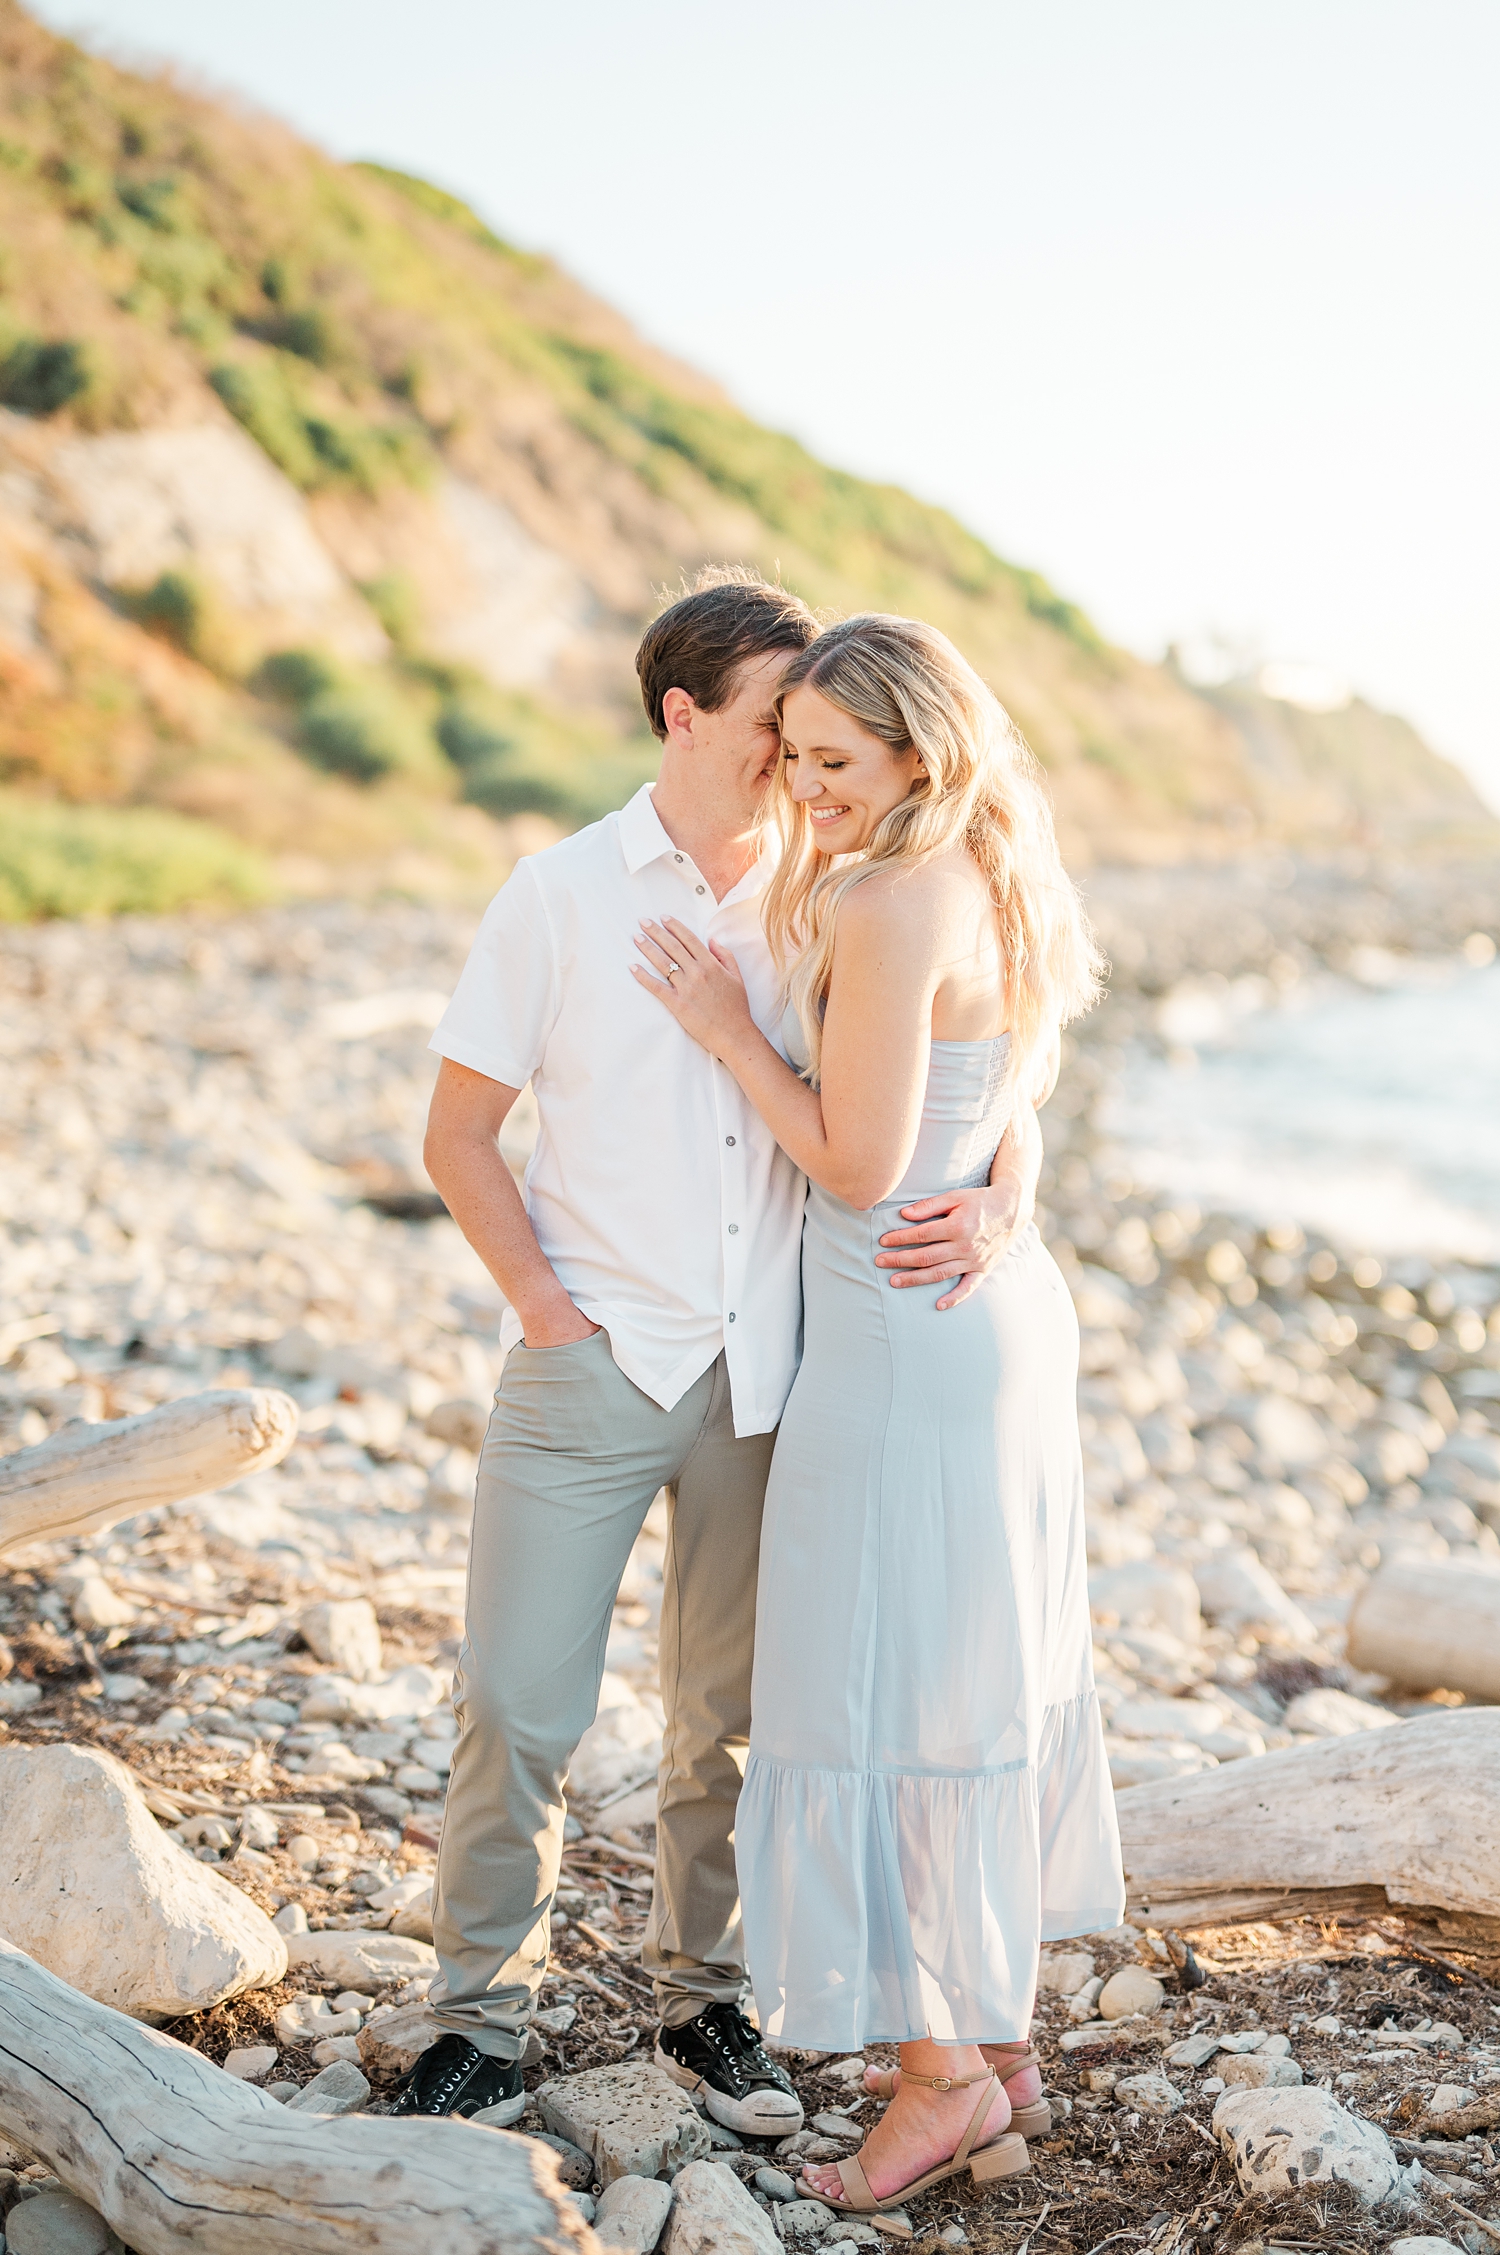 Nataly Hernandez Photography | Palos Verdes Estates Engagement Session | Romantic | Beach | Sunset | Film | Editorial | Fine Art Wedding Photographer -69.jpg